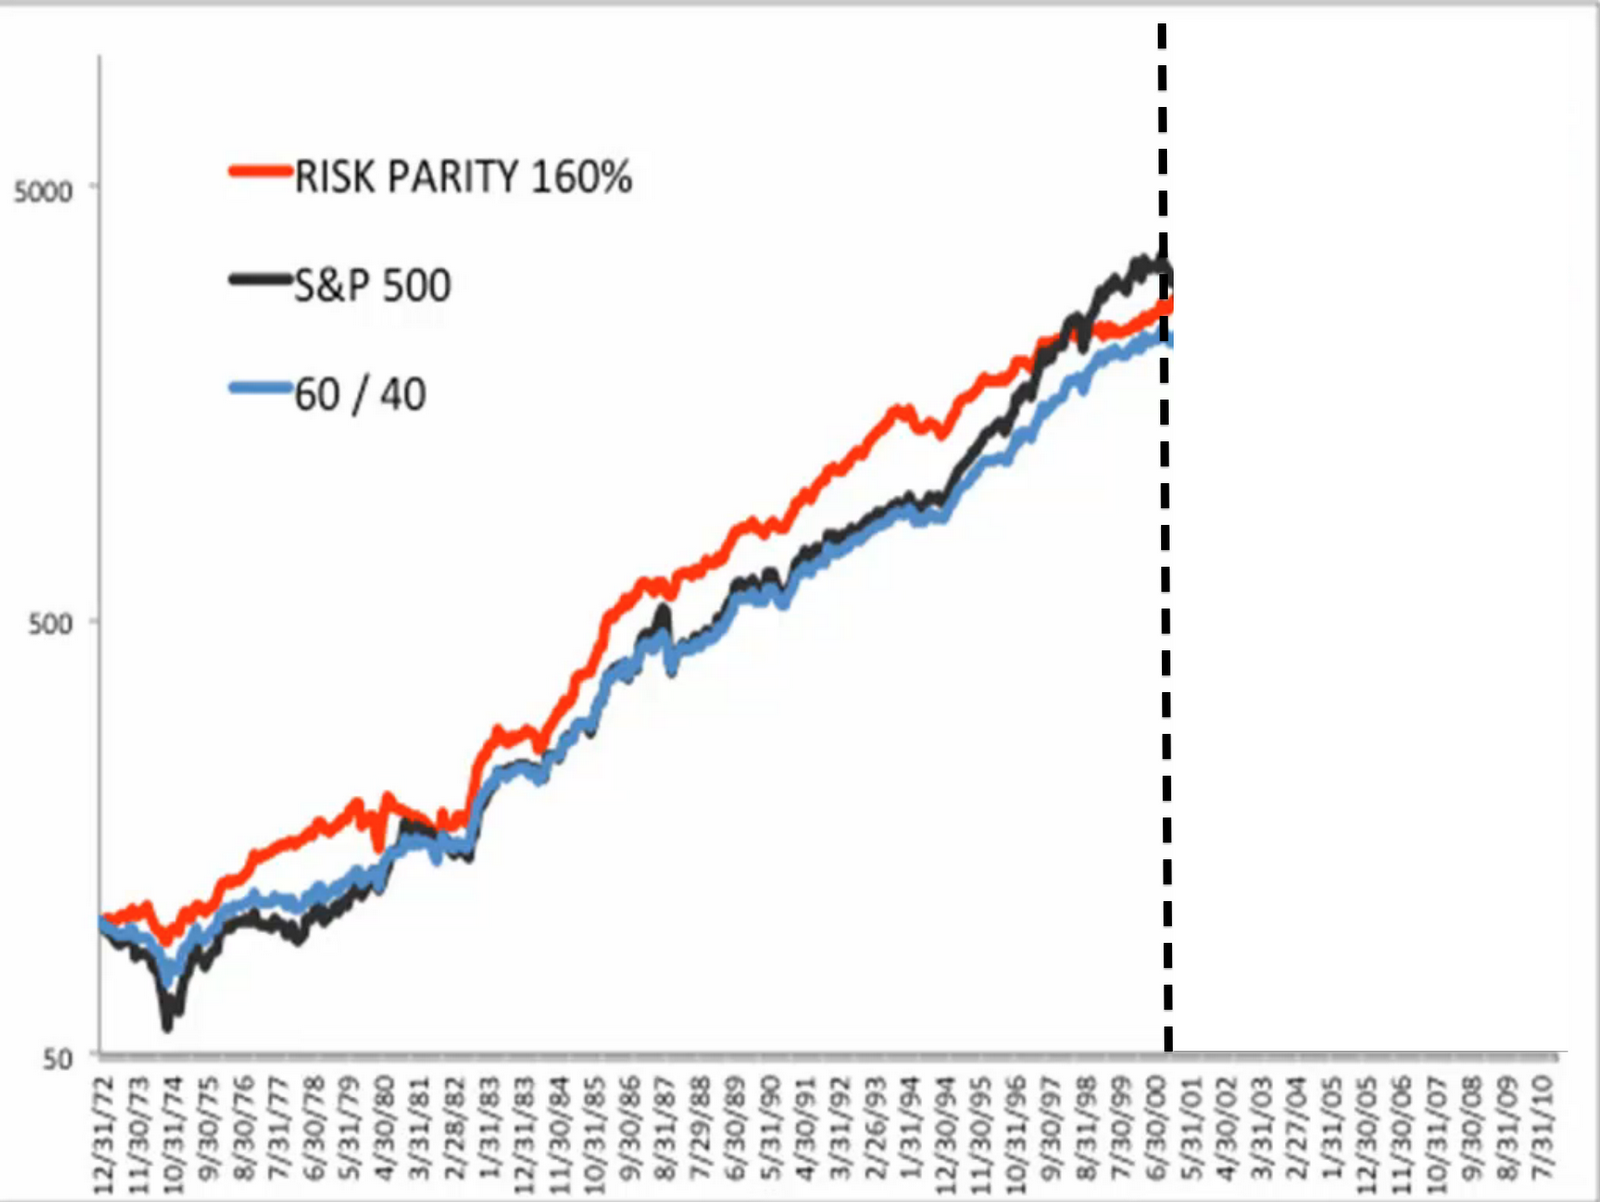 Faber_LT_Risk_Parity_Stock+Bonds_to_1999